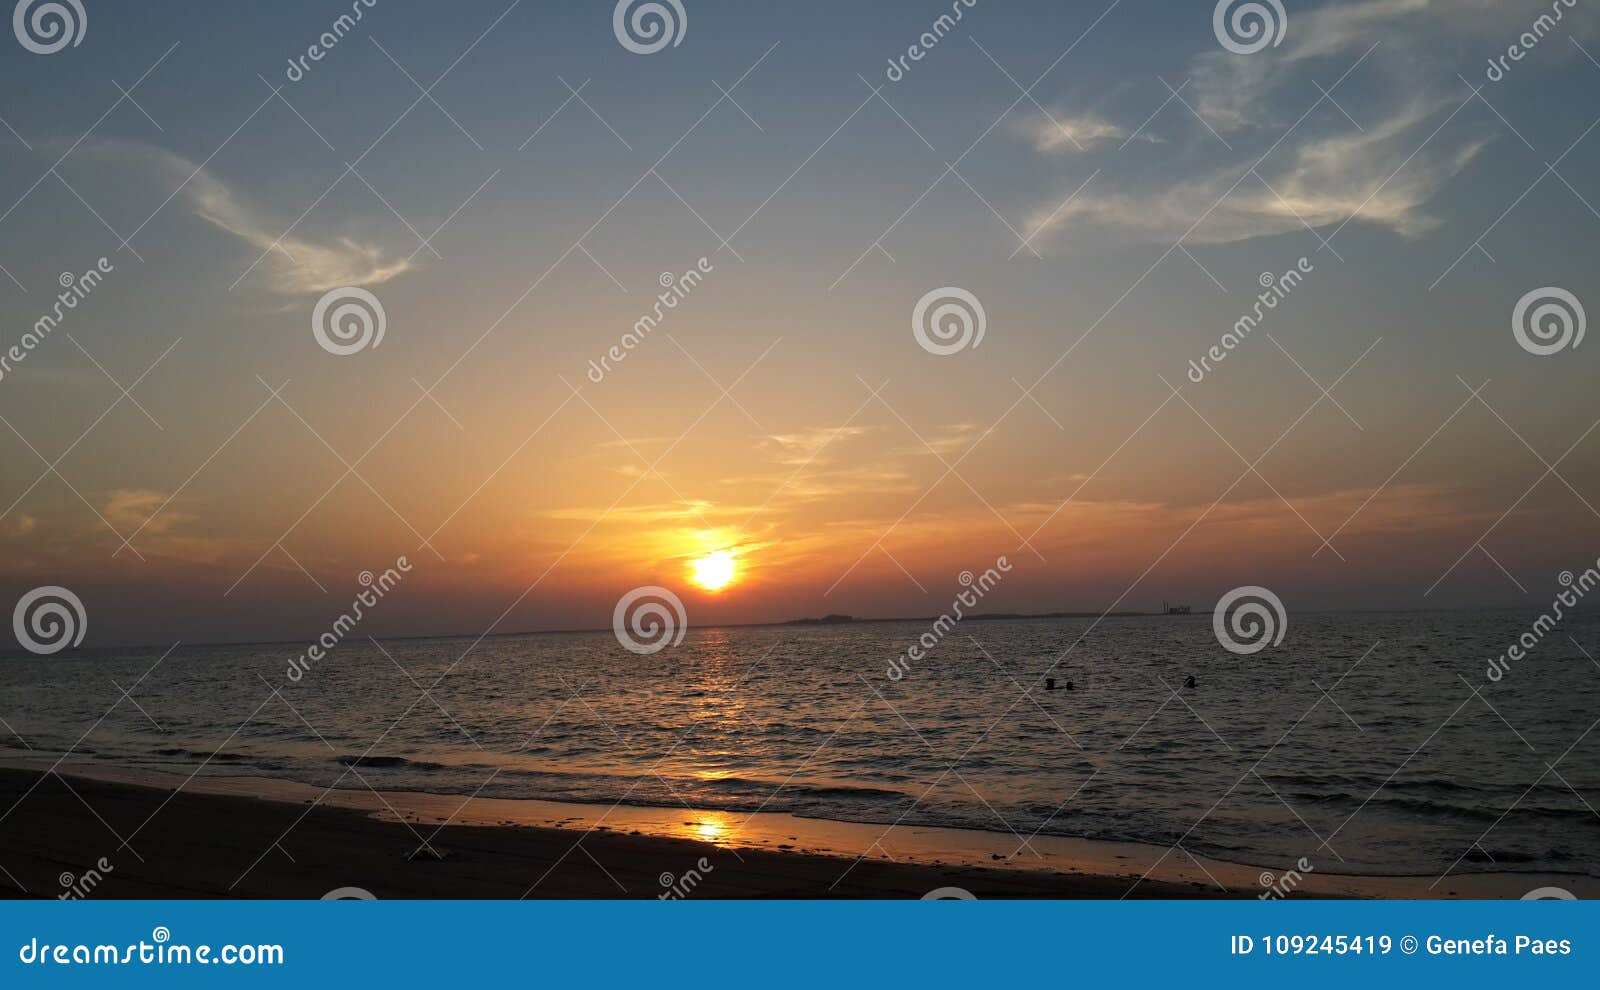 sunset at the umm al quwain beach - united arab emirates